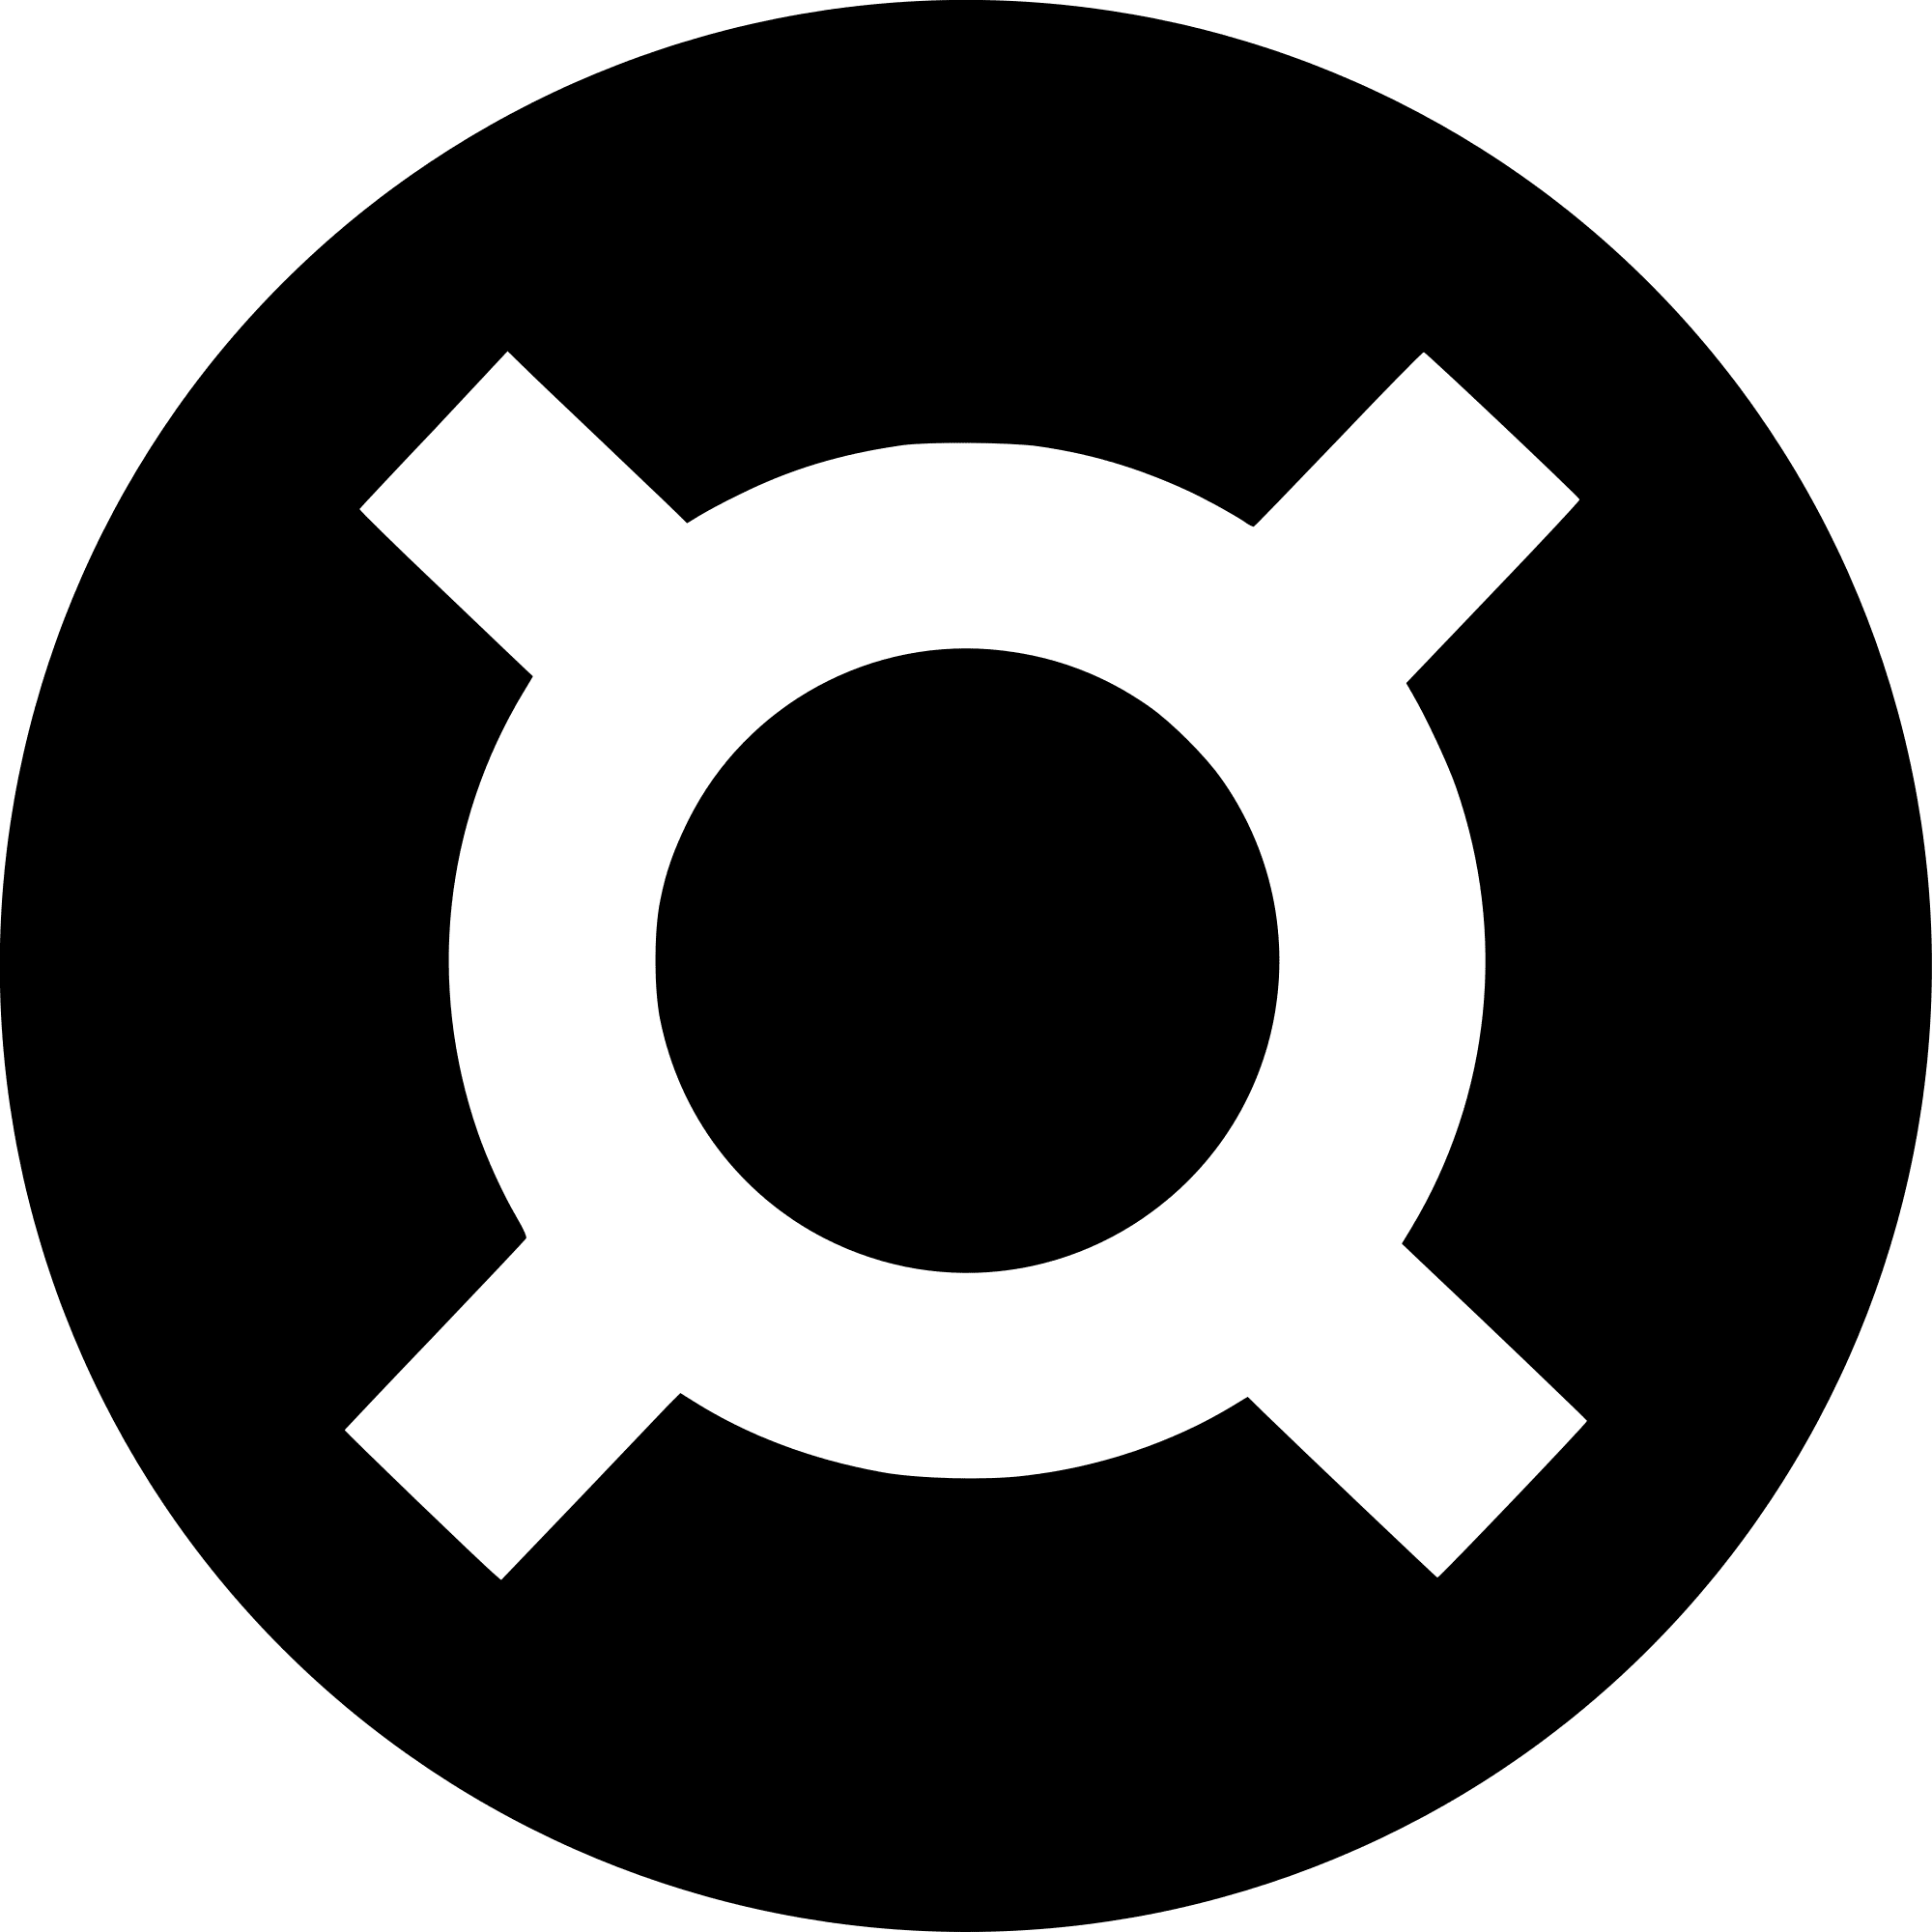 Frax logo in png format